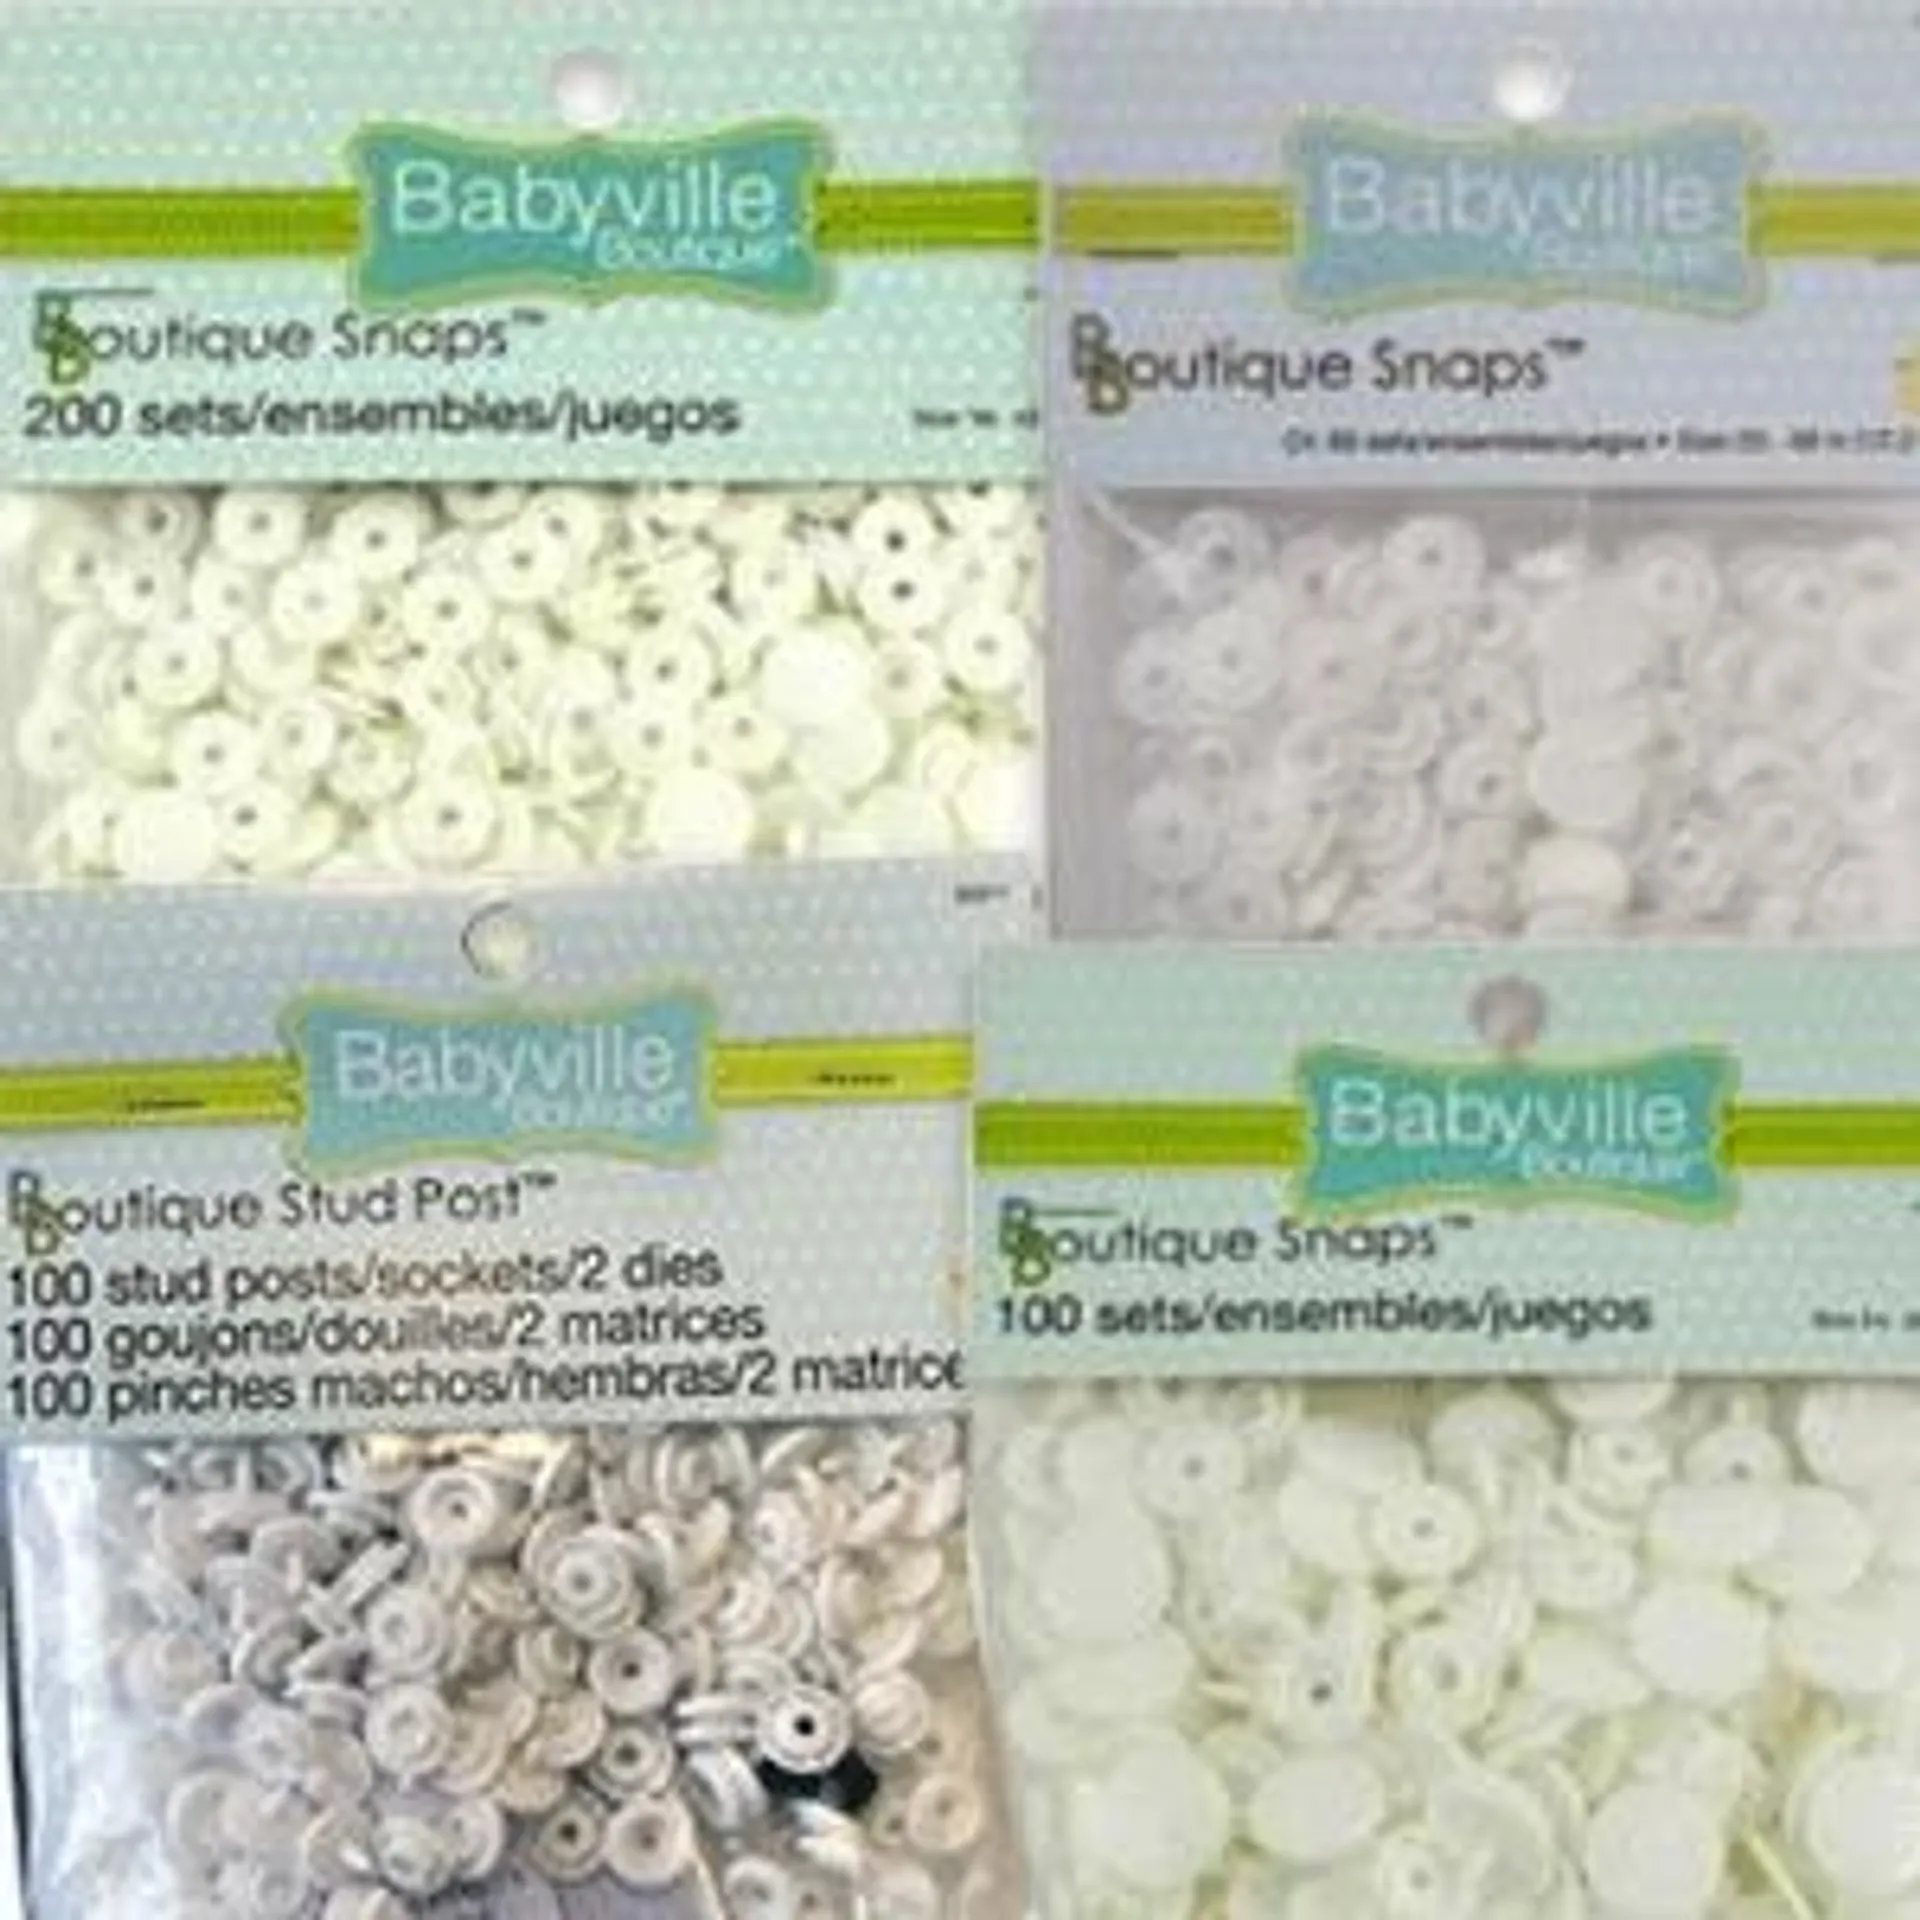 White Snaps - Large packs - Babyville